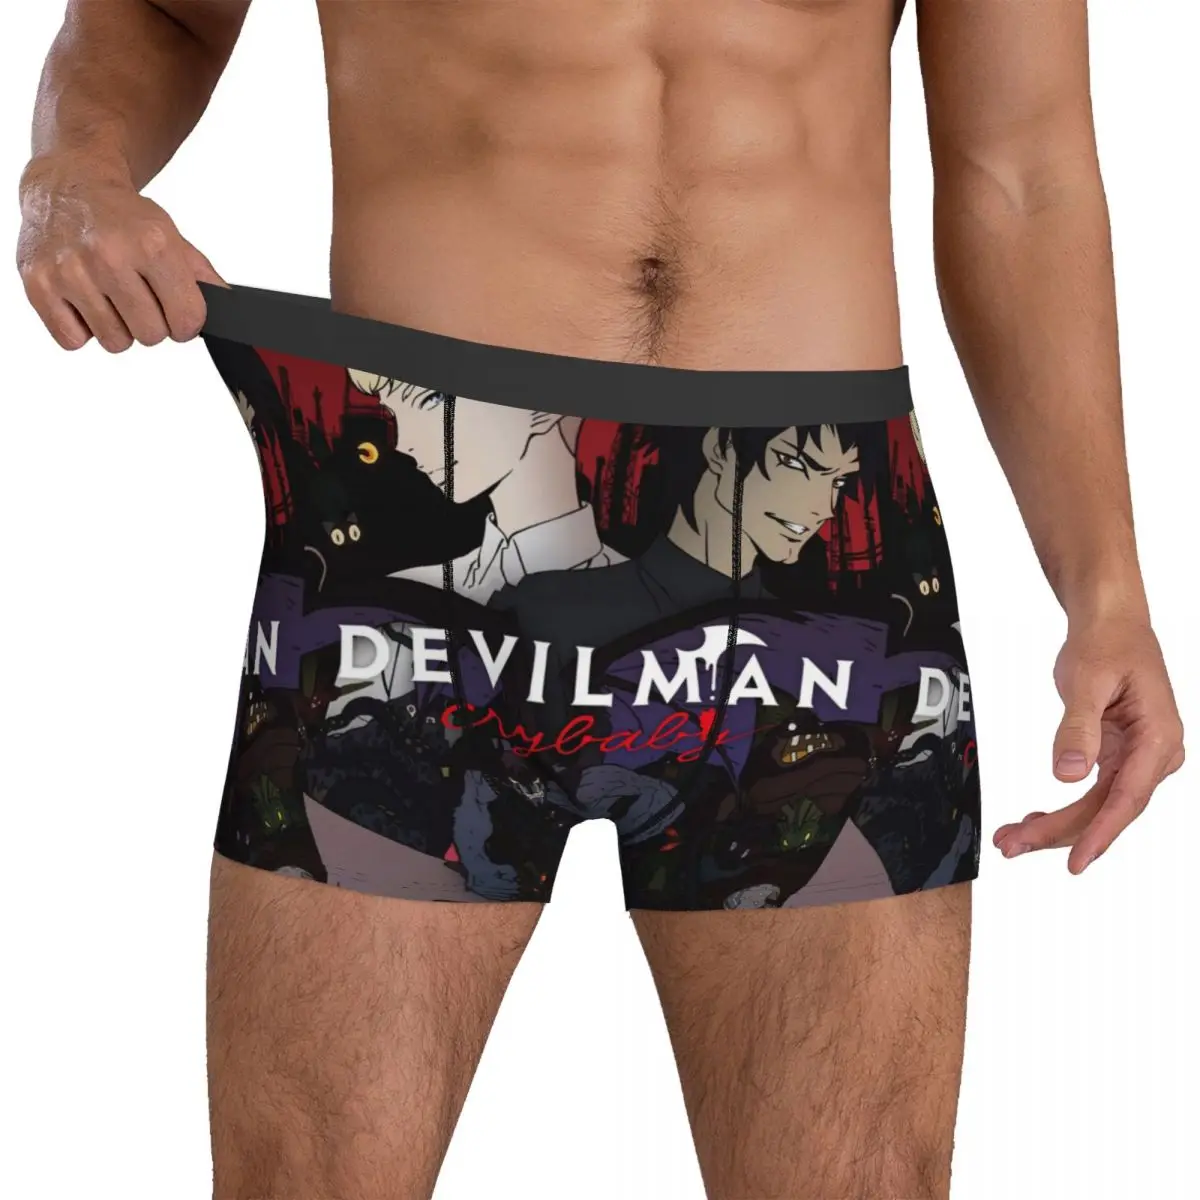 Devilman Crybaby Anime Underwear manga akira fudo graphic Males Panties Print Comfortable Trunk Hot Boxer Brief Plus Size